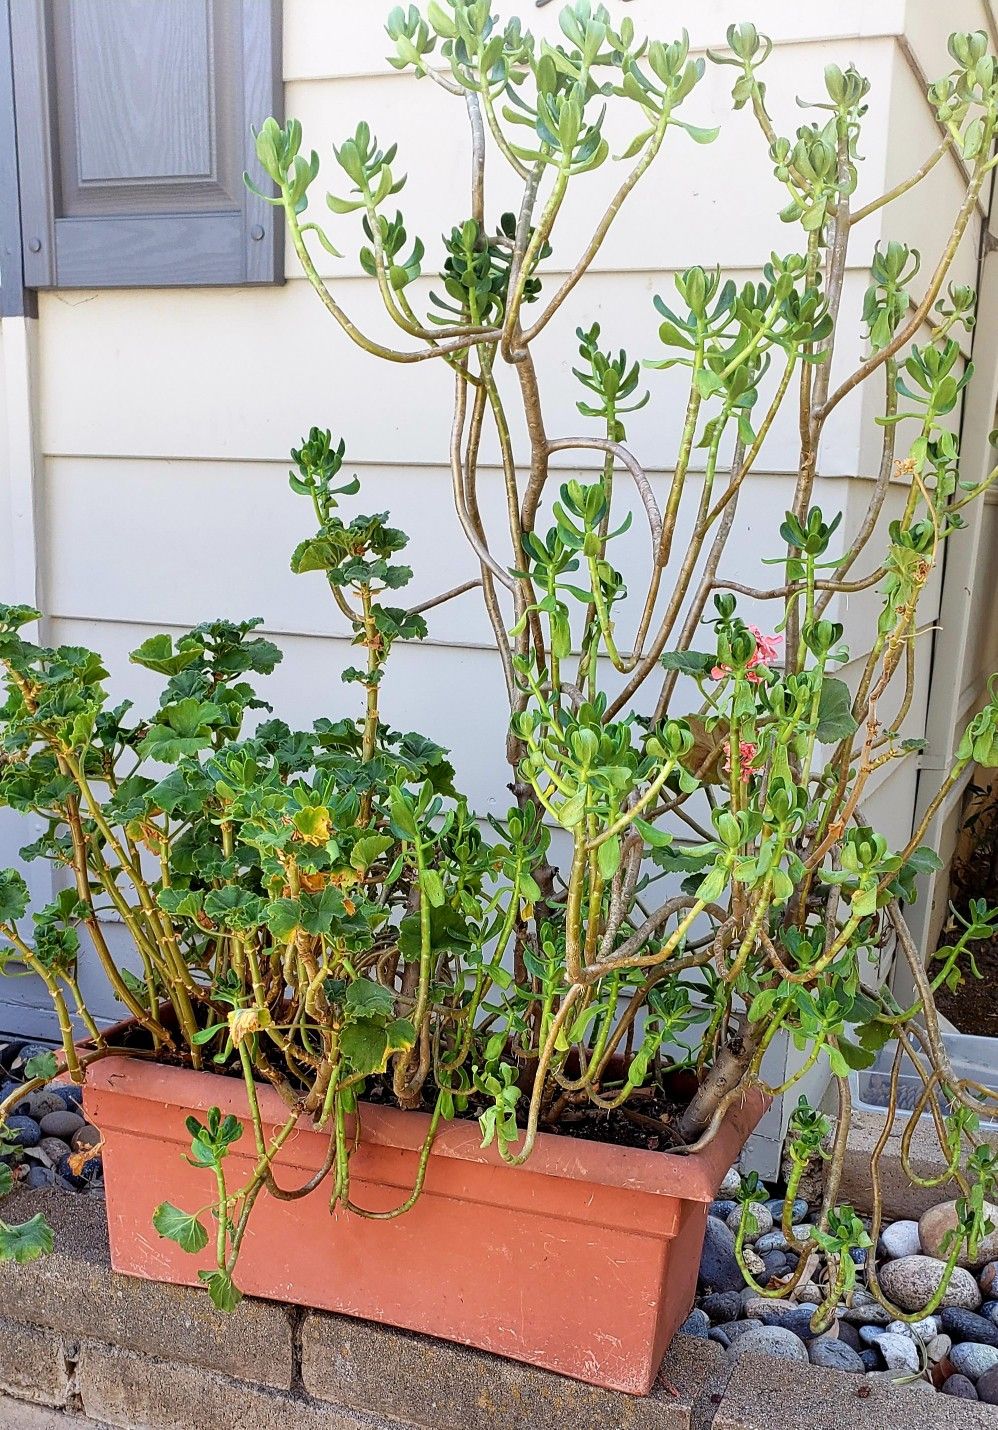 Plant with plastic pot